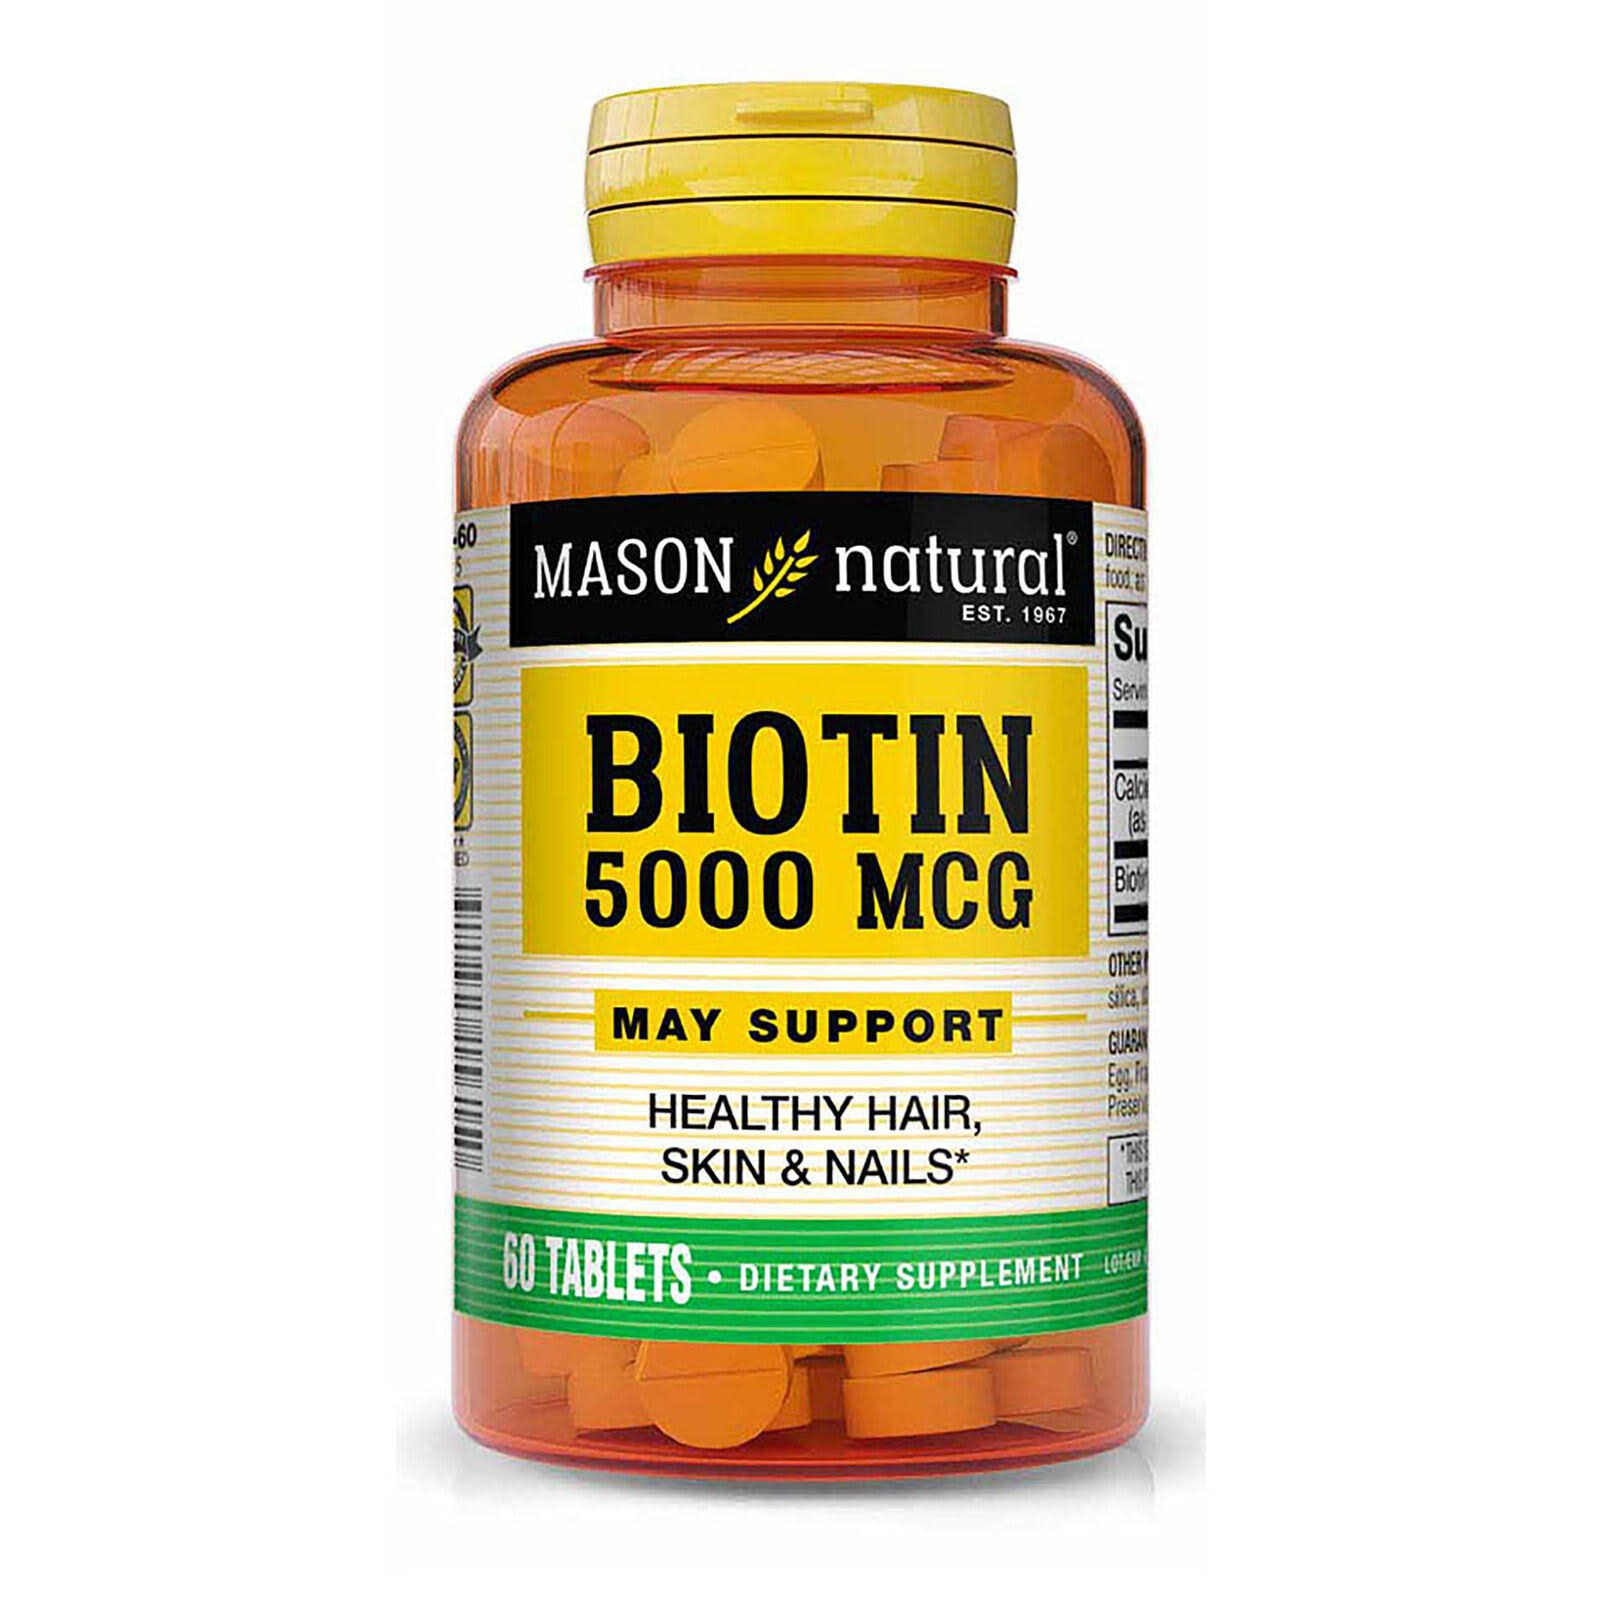 Mason Natural Vitamin B Super Biotin 5000mcg Tablets - x60